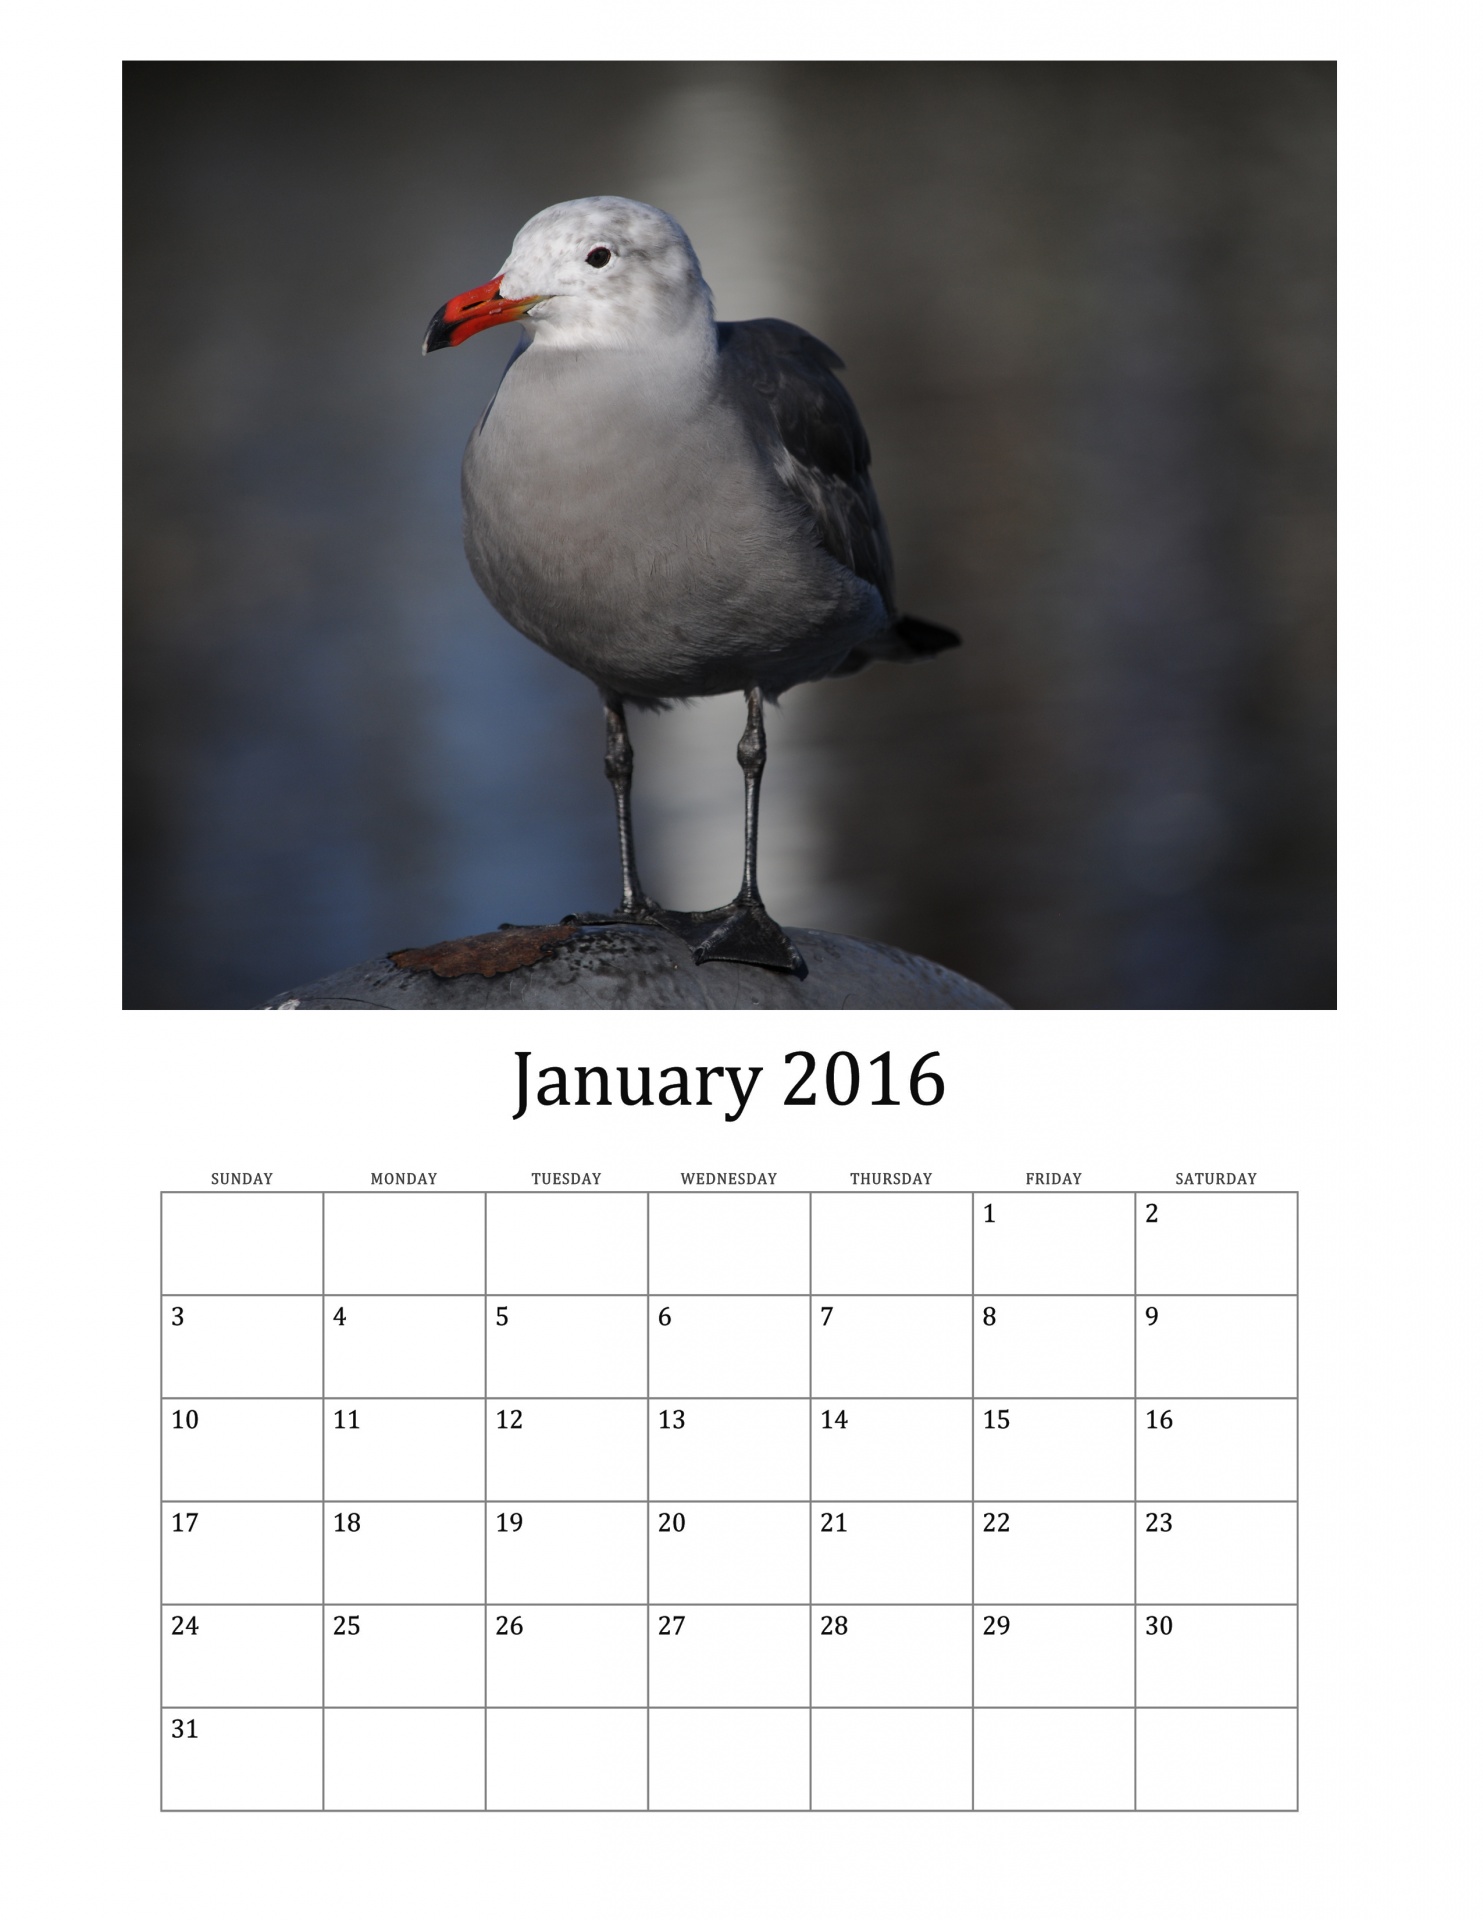 January 2016 Calendar Of Birds